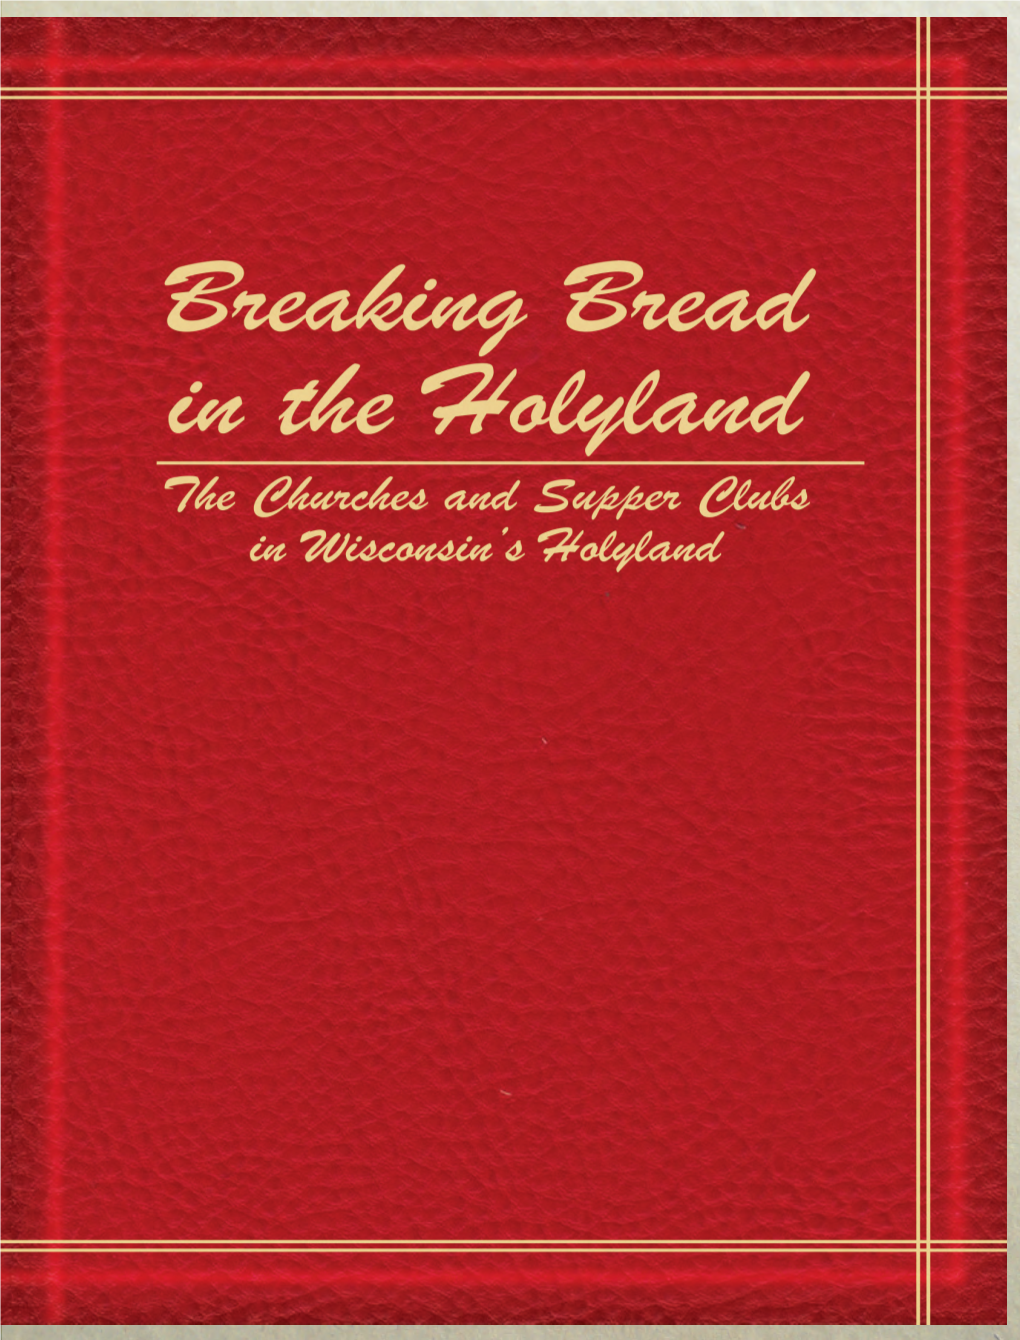 Breaking Bread in the Holyland